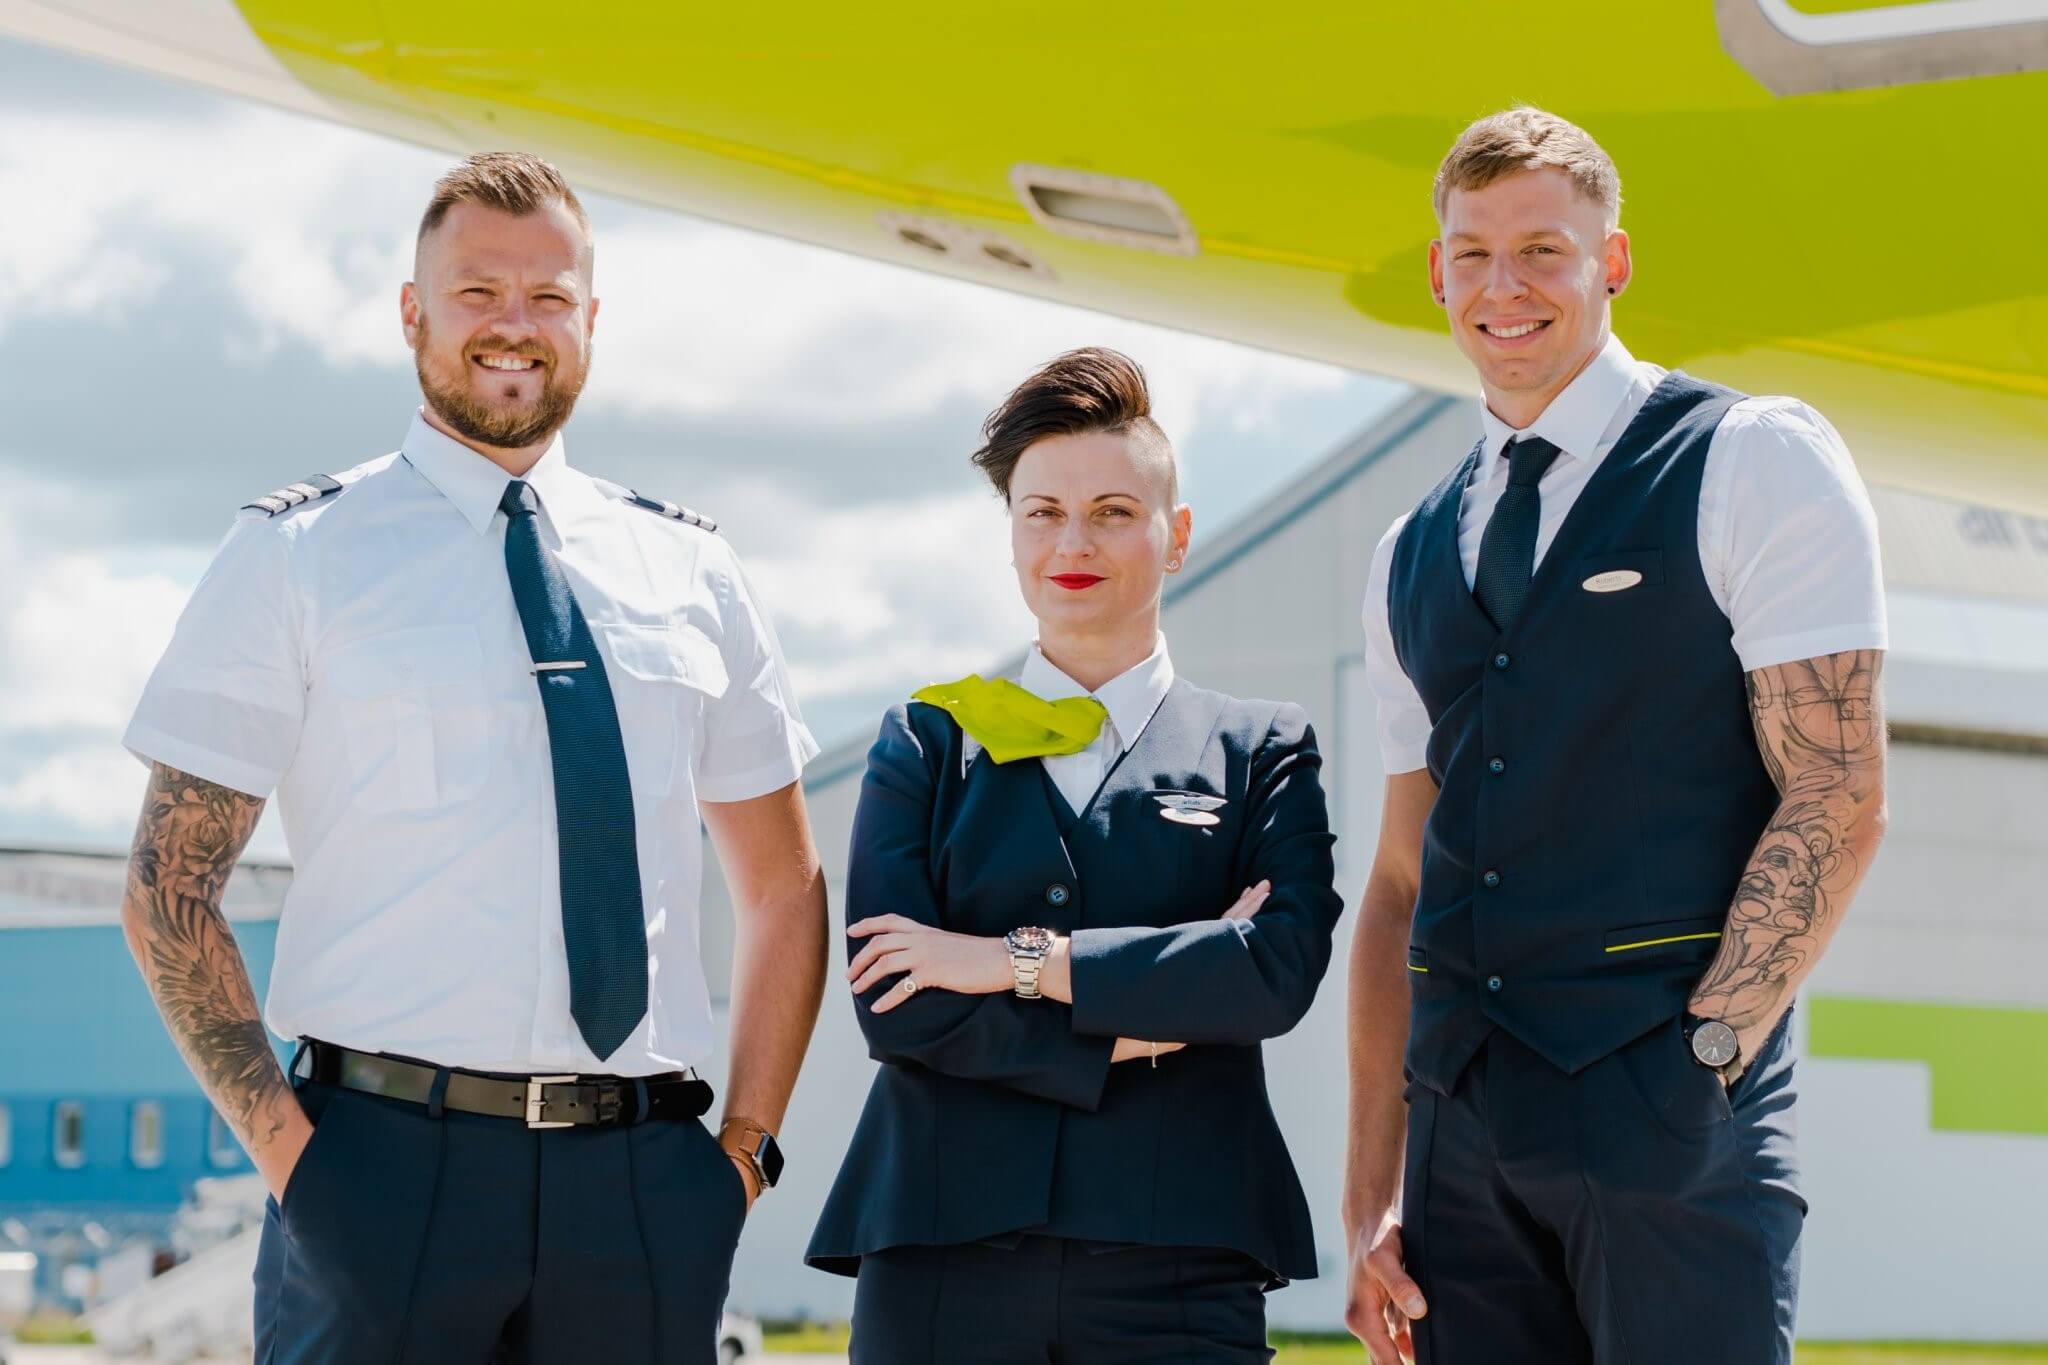 airBaltic allows cabin crew to display tattoos - AeroTime